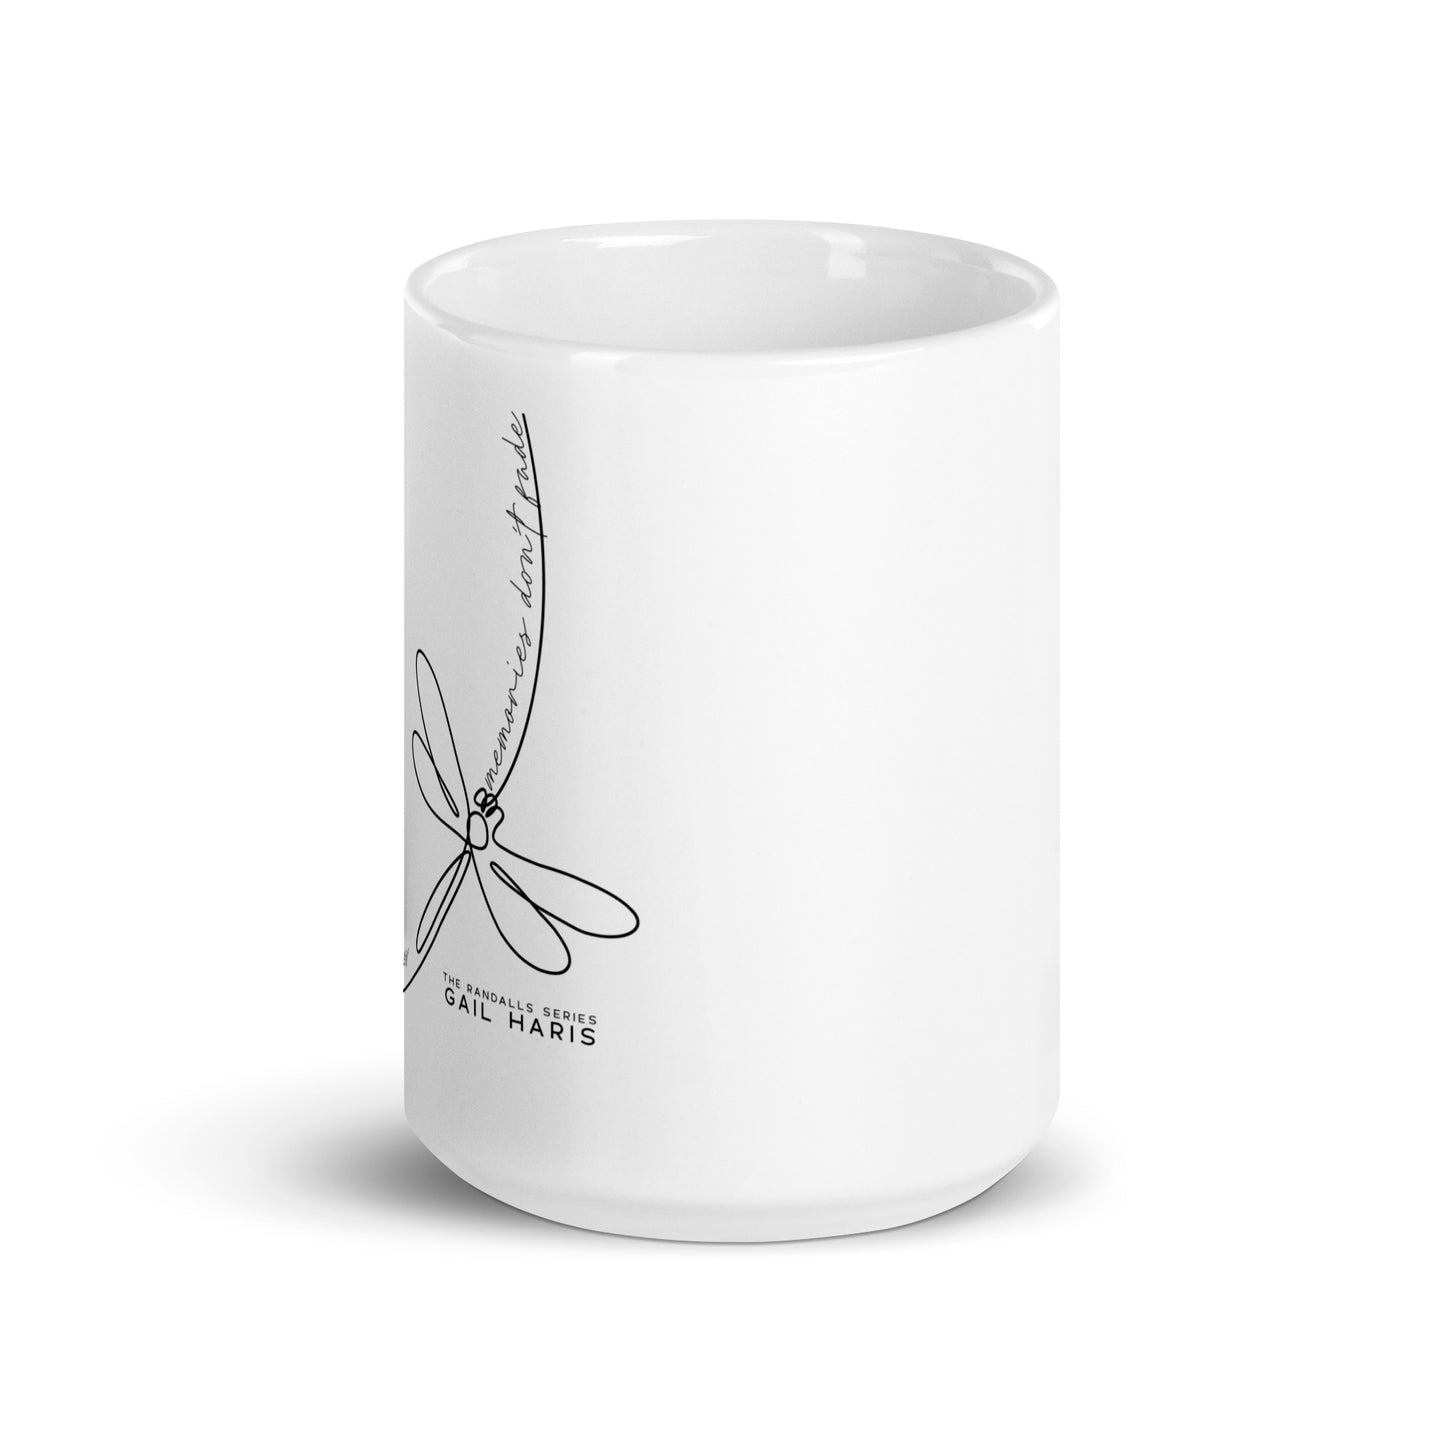 The Randall Series Dragonfly White glossy mug